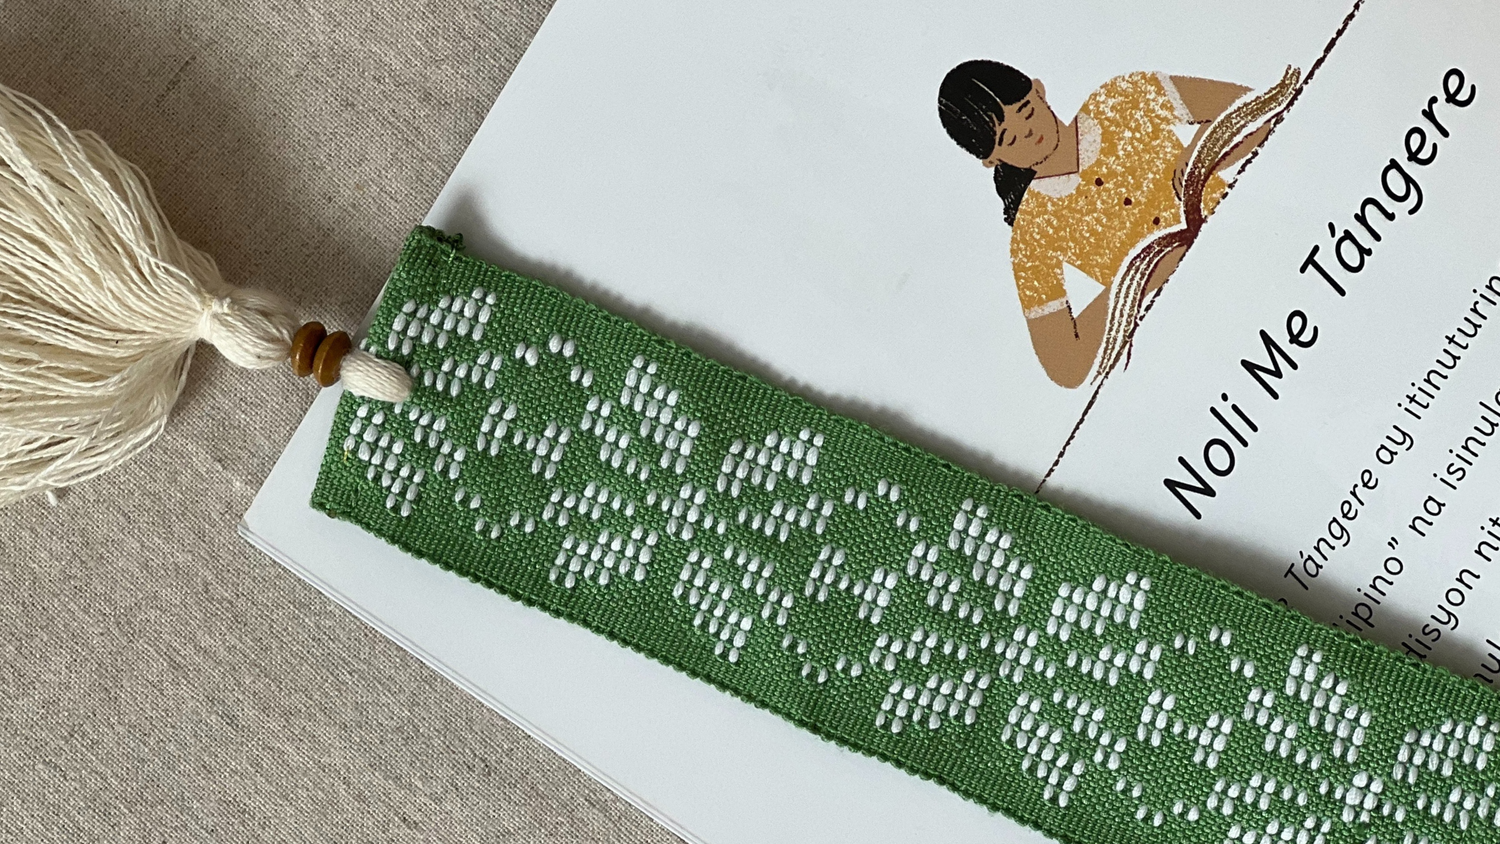 Langkit Weaving: Binding Fabrics, Connecting Maranao Communities